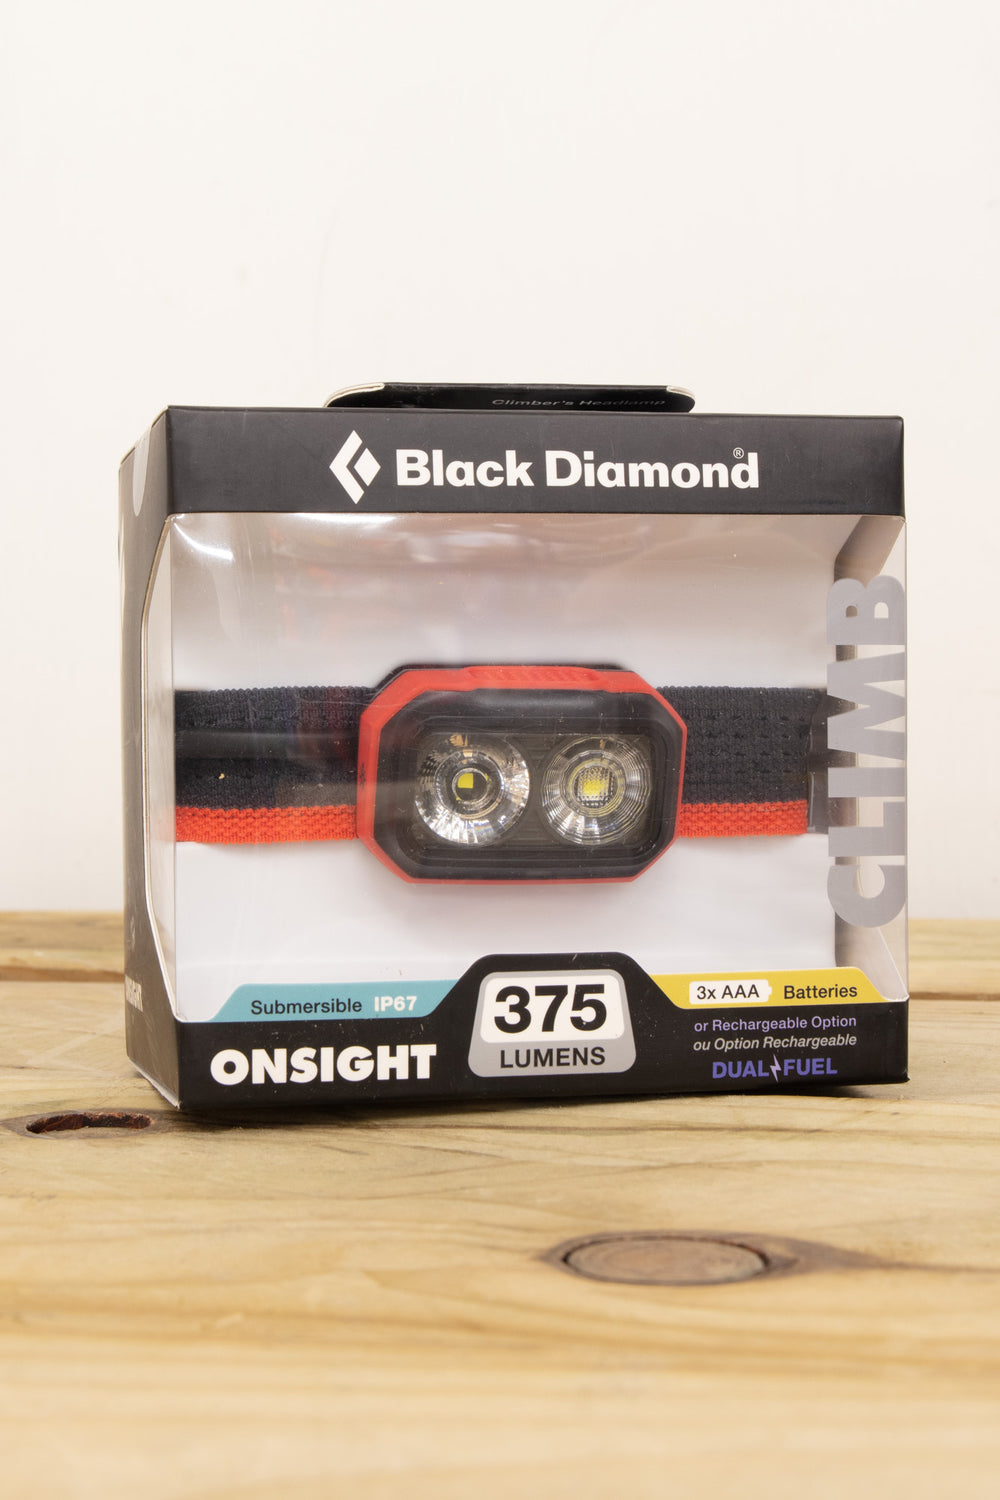 Black Diamond - Onsight 375 Headlamp